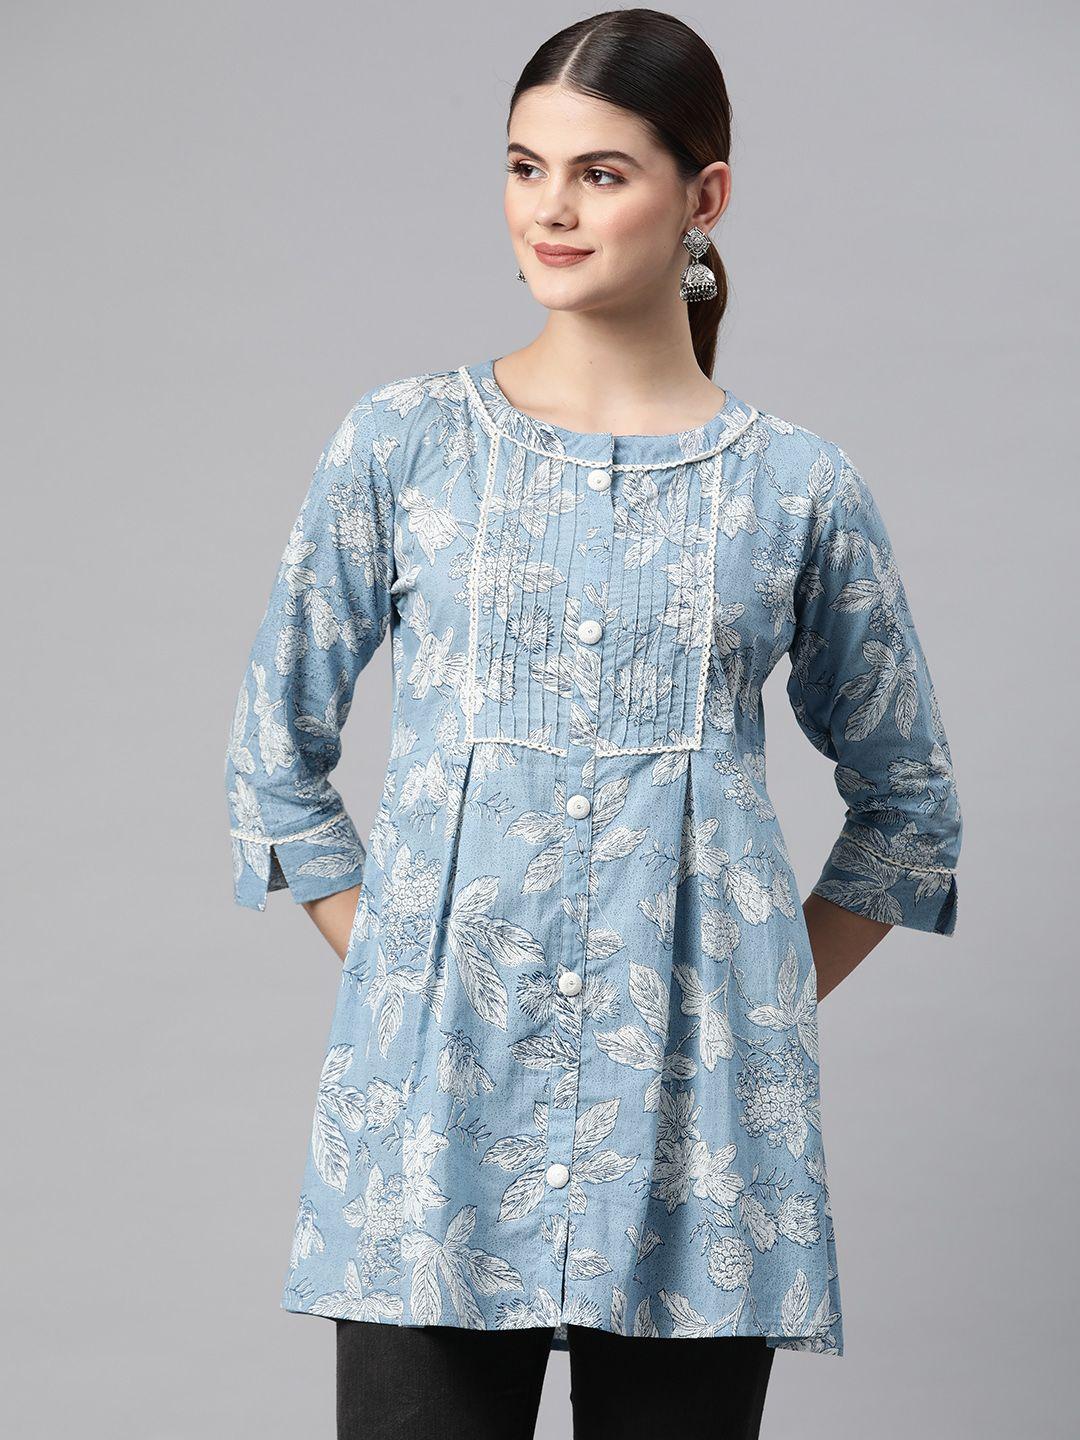 readiprint fashions floral print cotton longline ethnic top